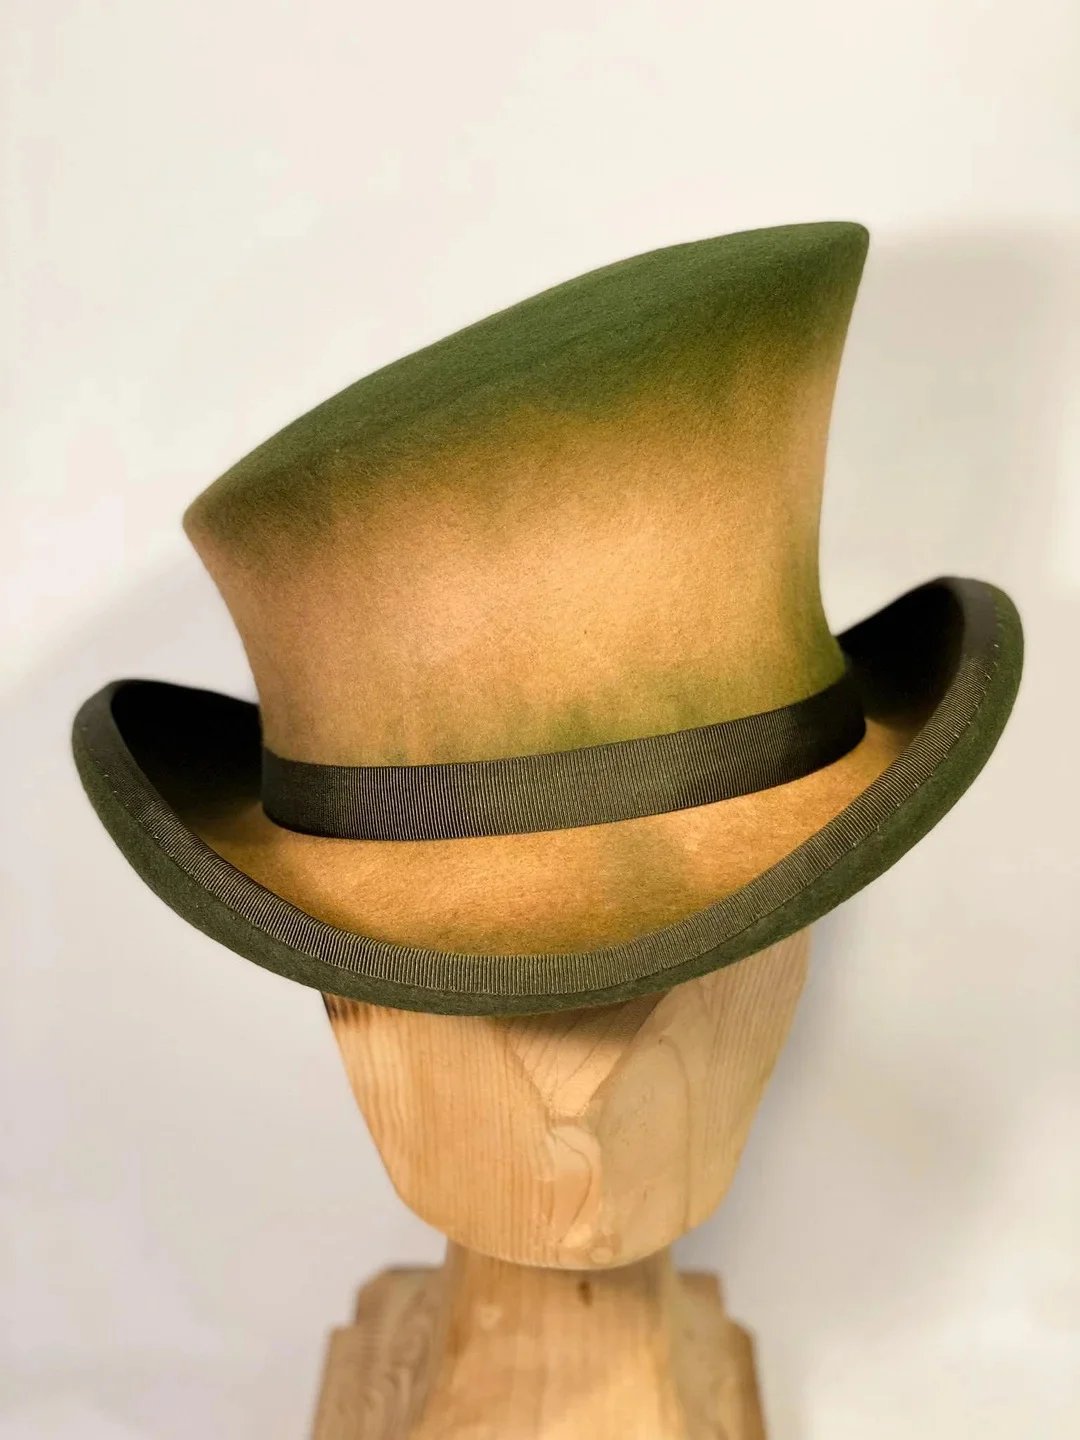 🎁20% OFF - Asymmetric top hat